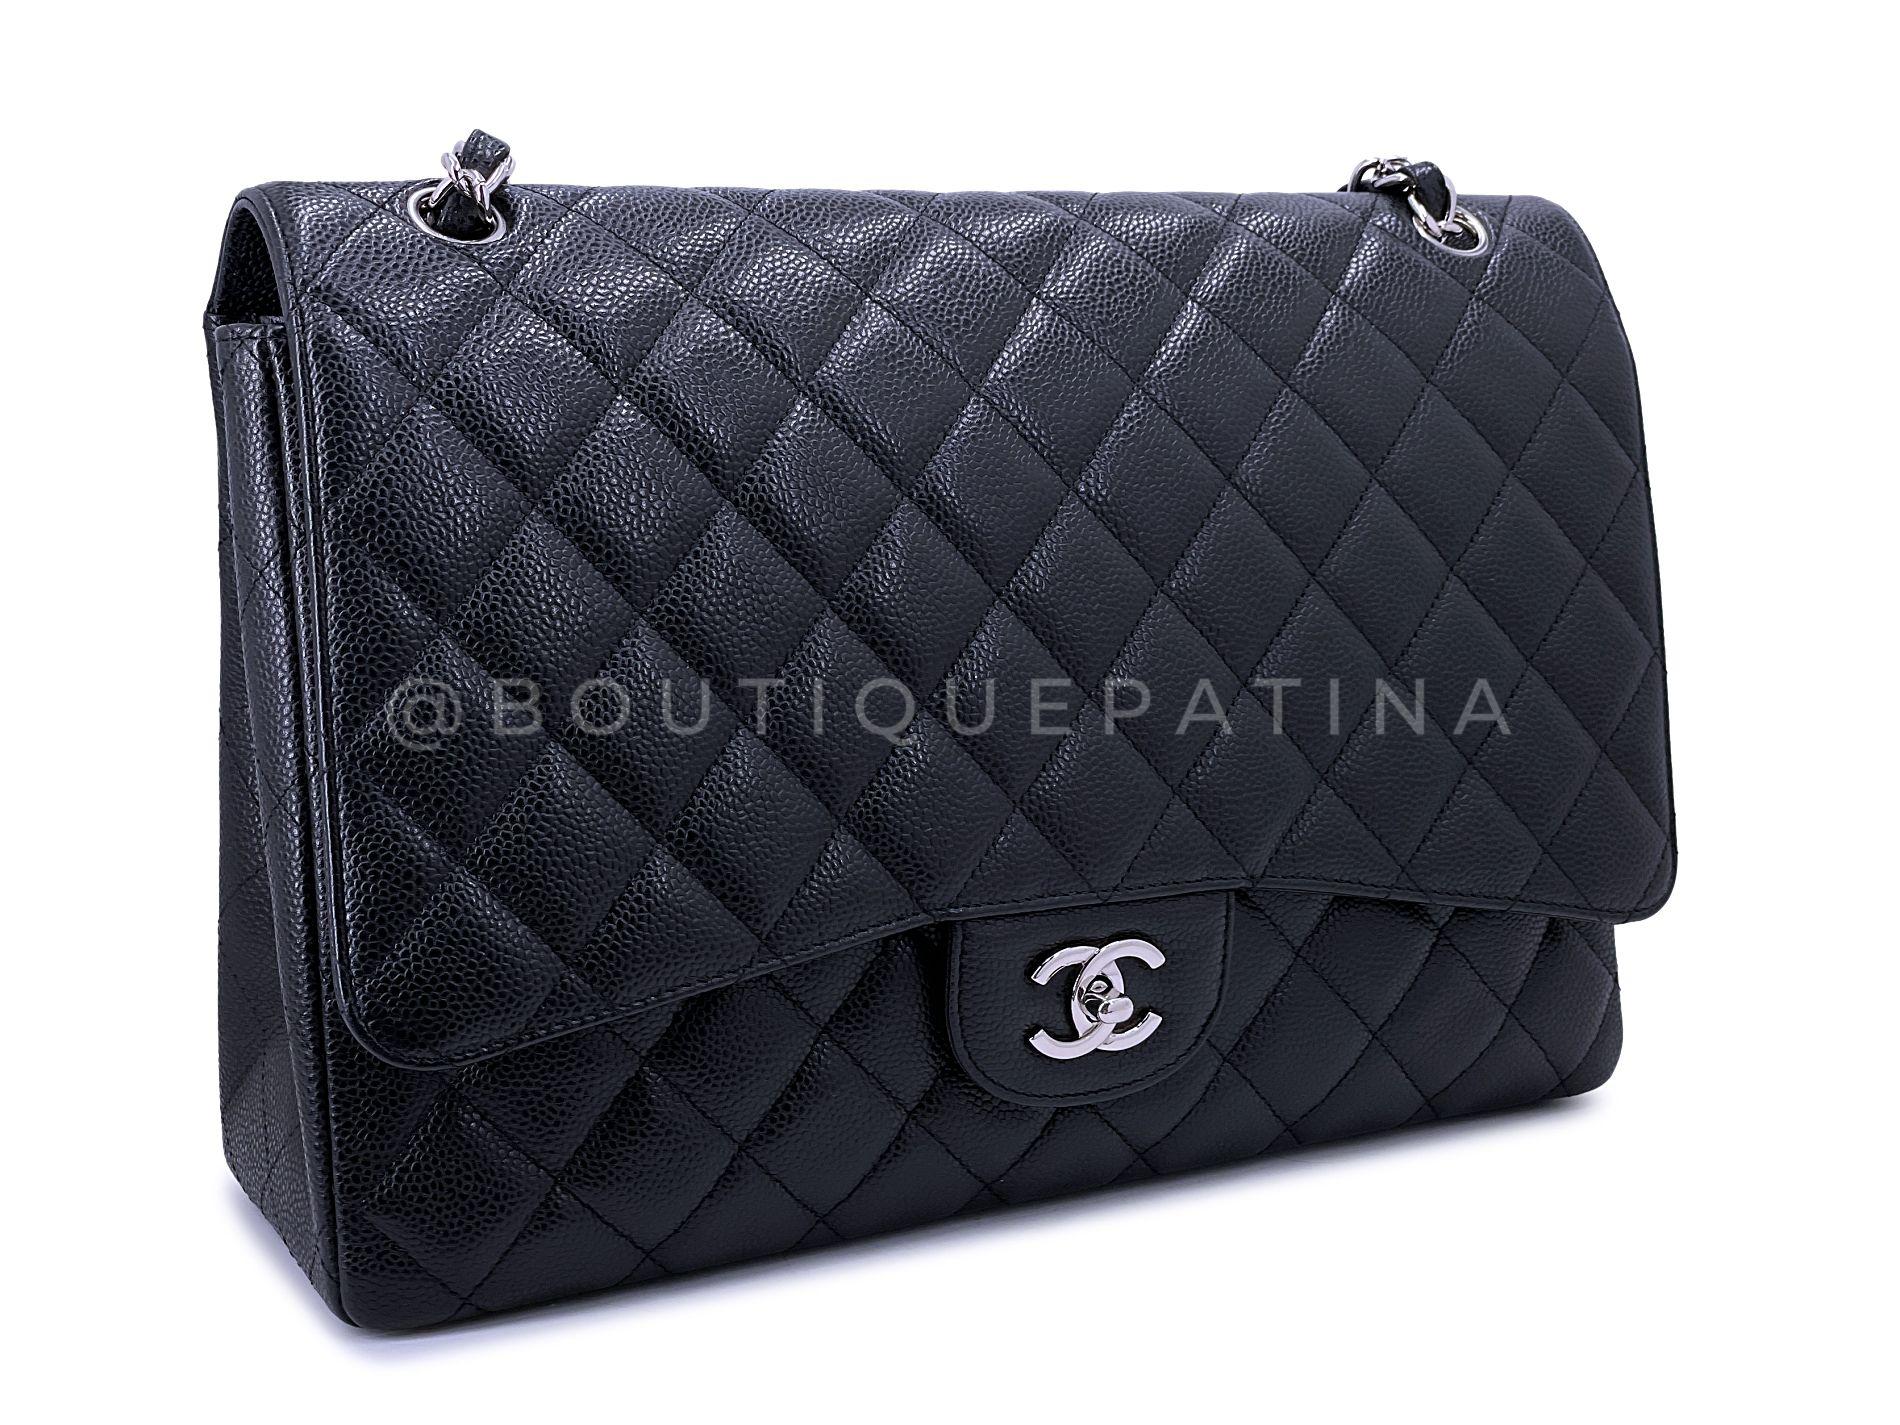 Chanel Black Caviar Maxi Flap Bag SHW Single 66714 In Excellent Condition For Sale In Costa Mesa, CA